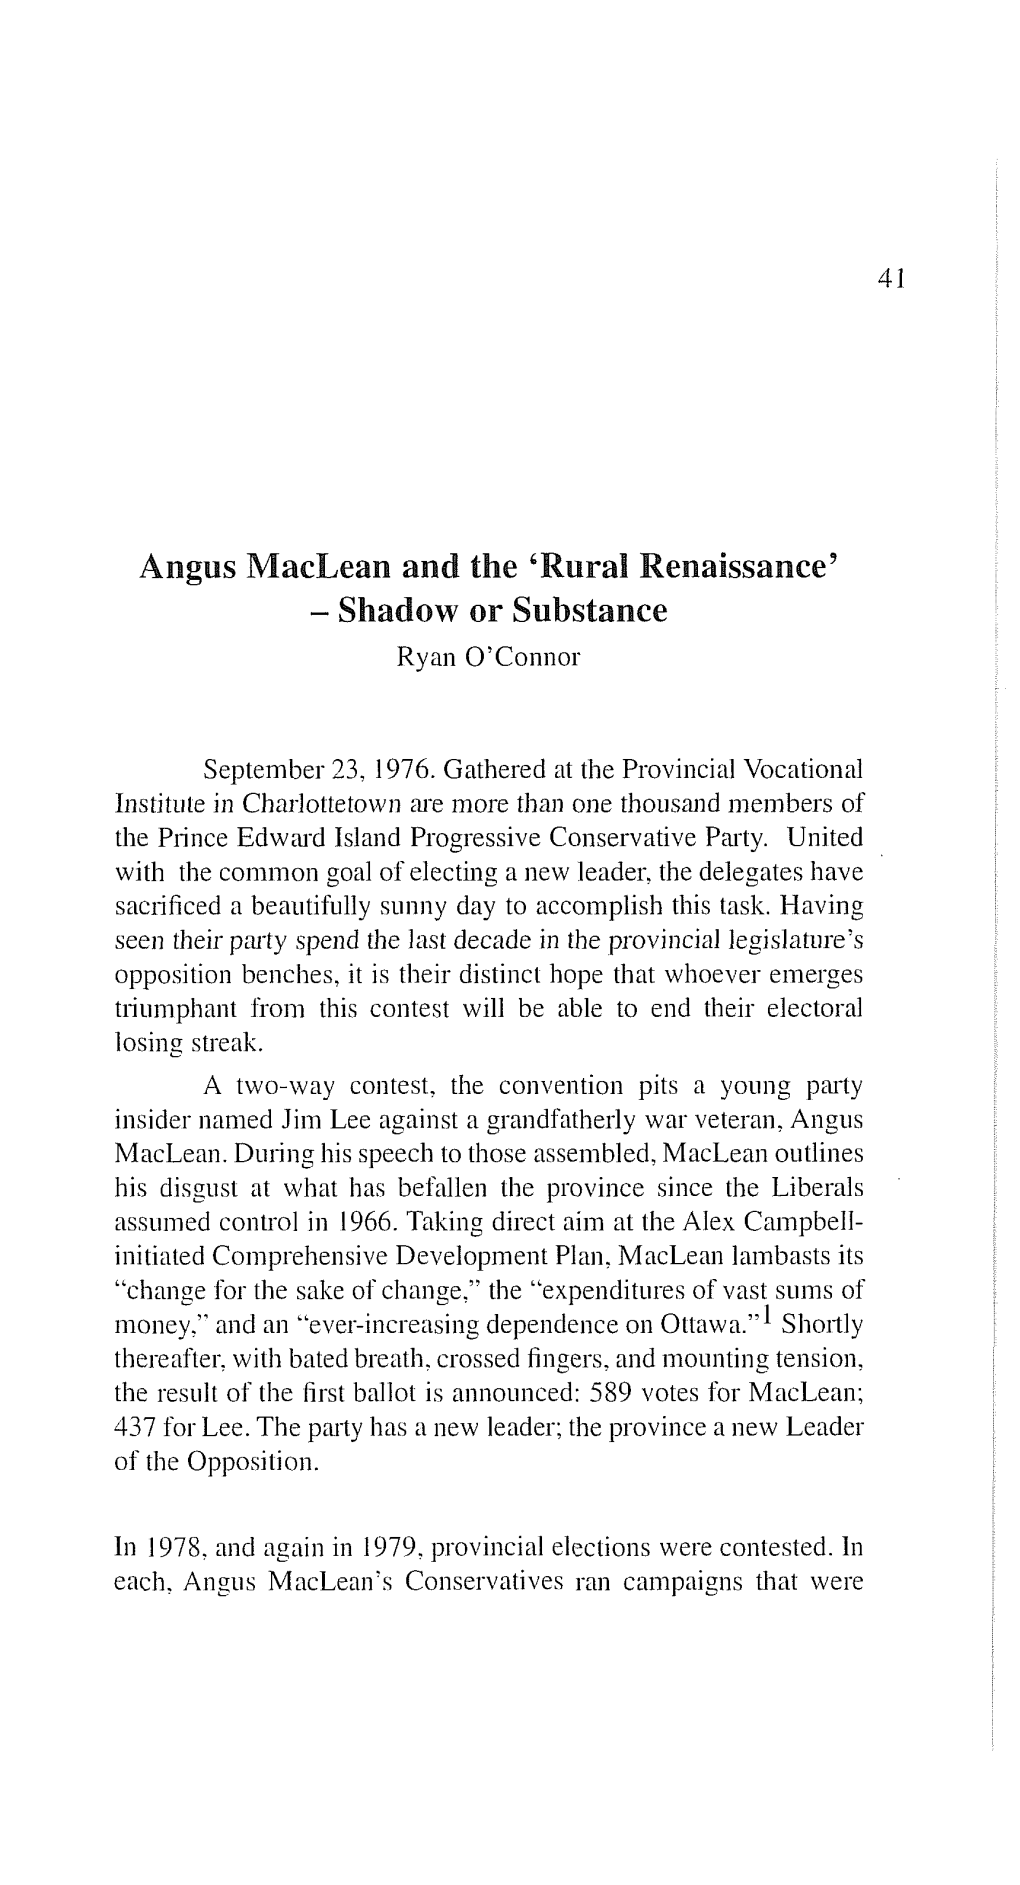 Angus Maclean and the 'Rural Renaissance' - Shadow Or Substance Ryan O'coi1110r